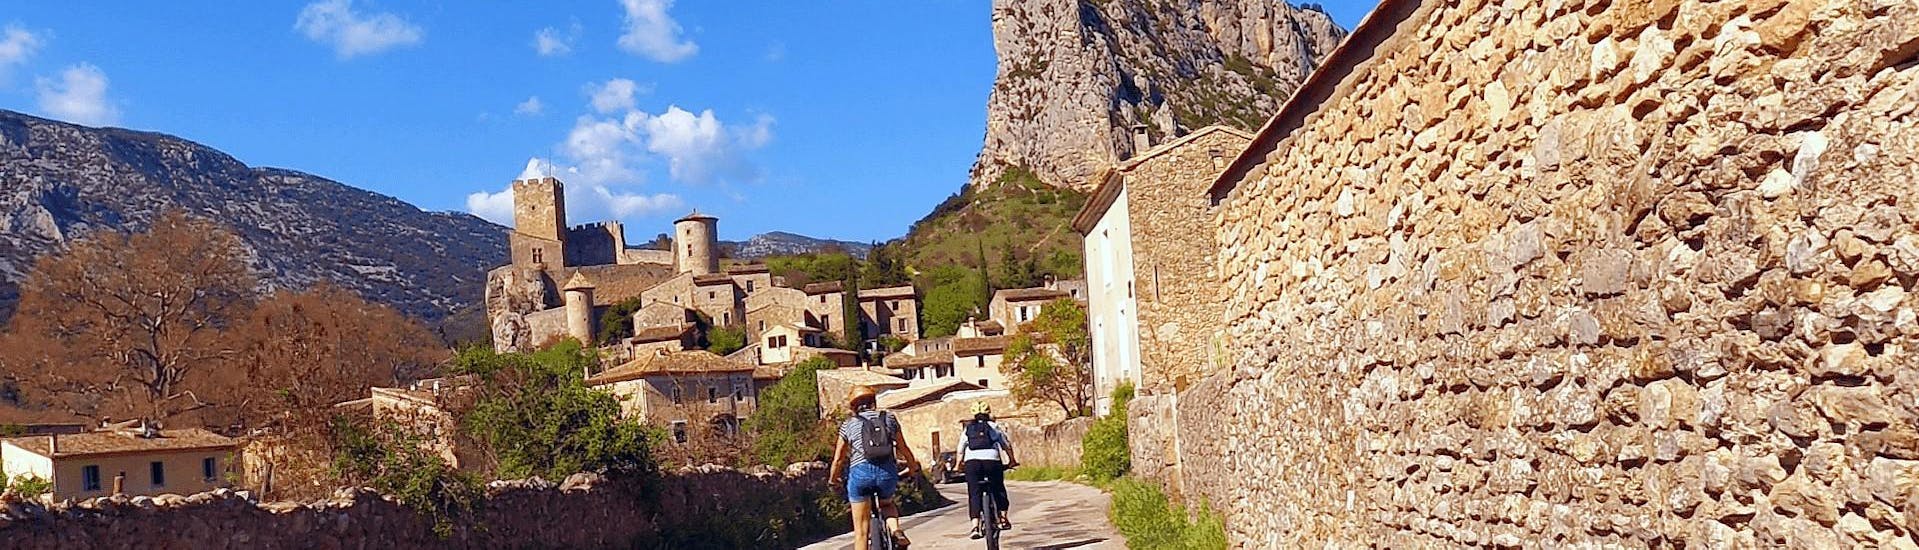 Noleggio di bici a Saint-Jean-de-Buèges - Gorges de l'Hérault.